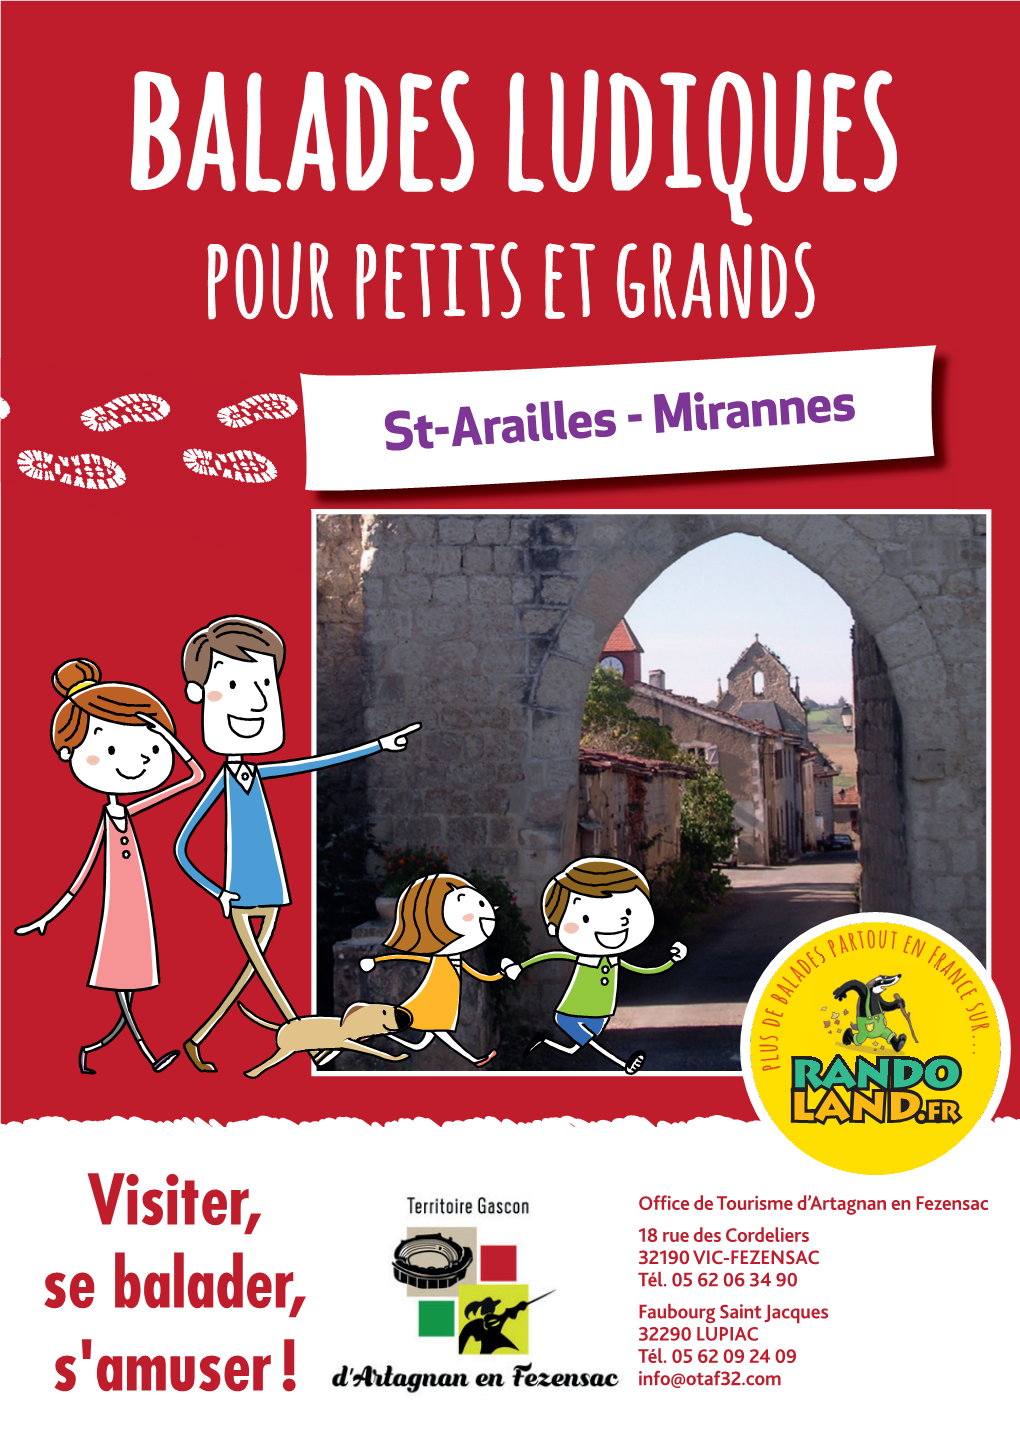 St-Arailles - Mirannes